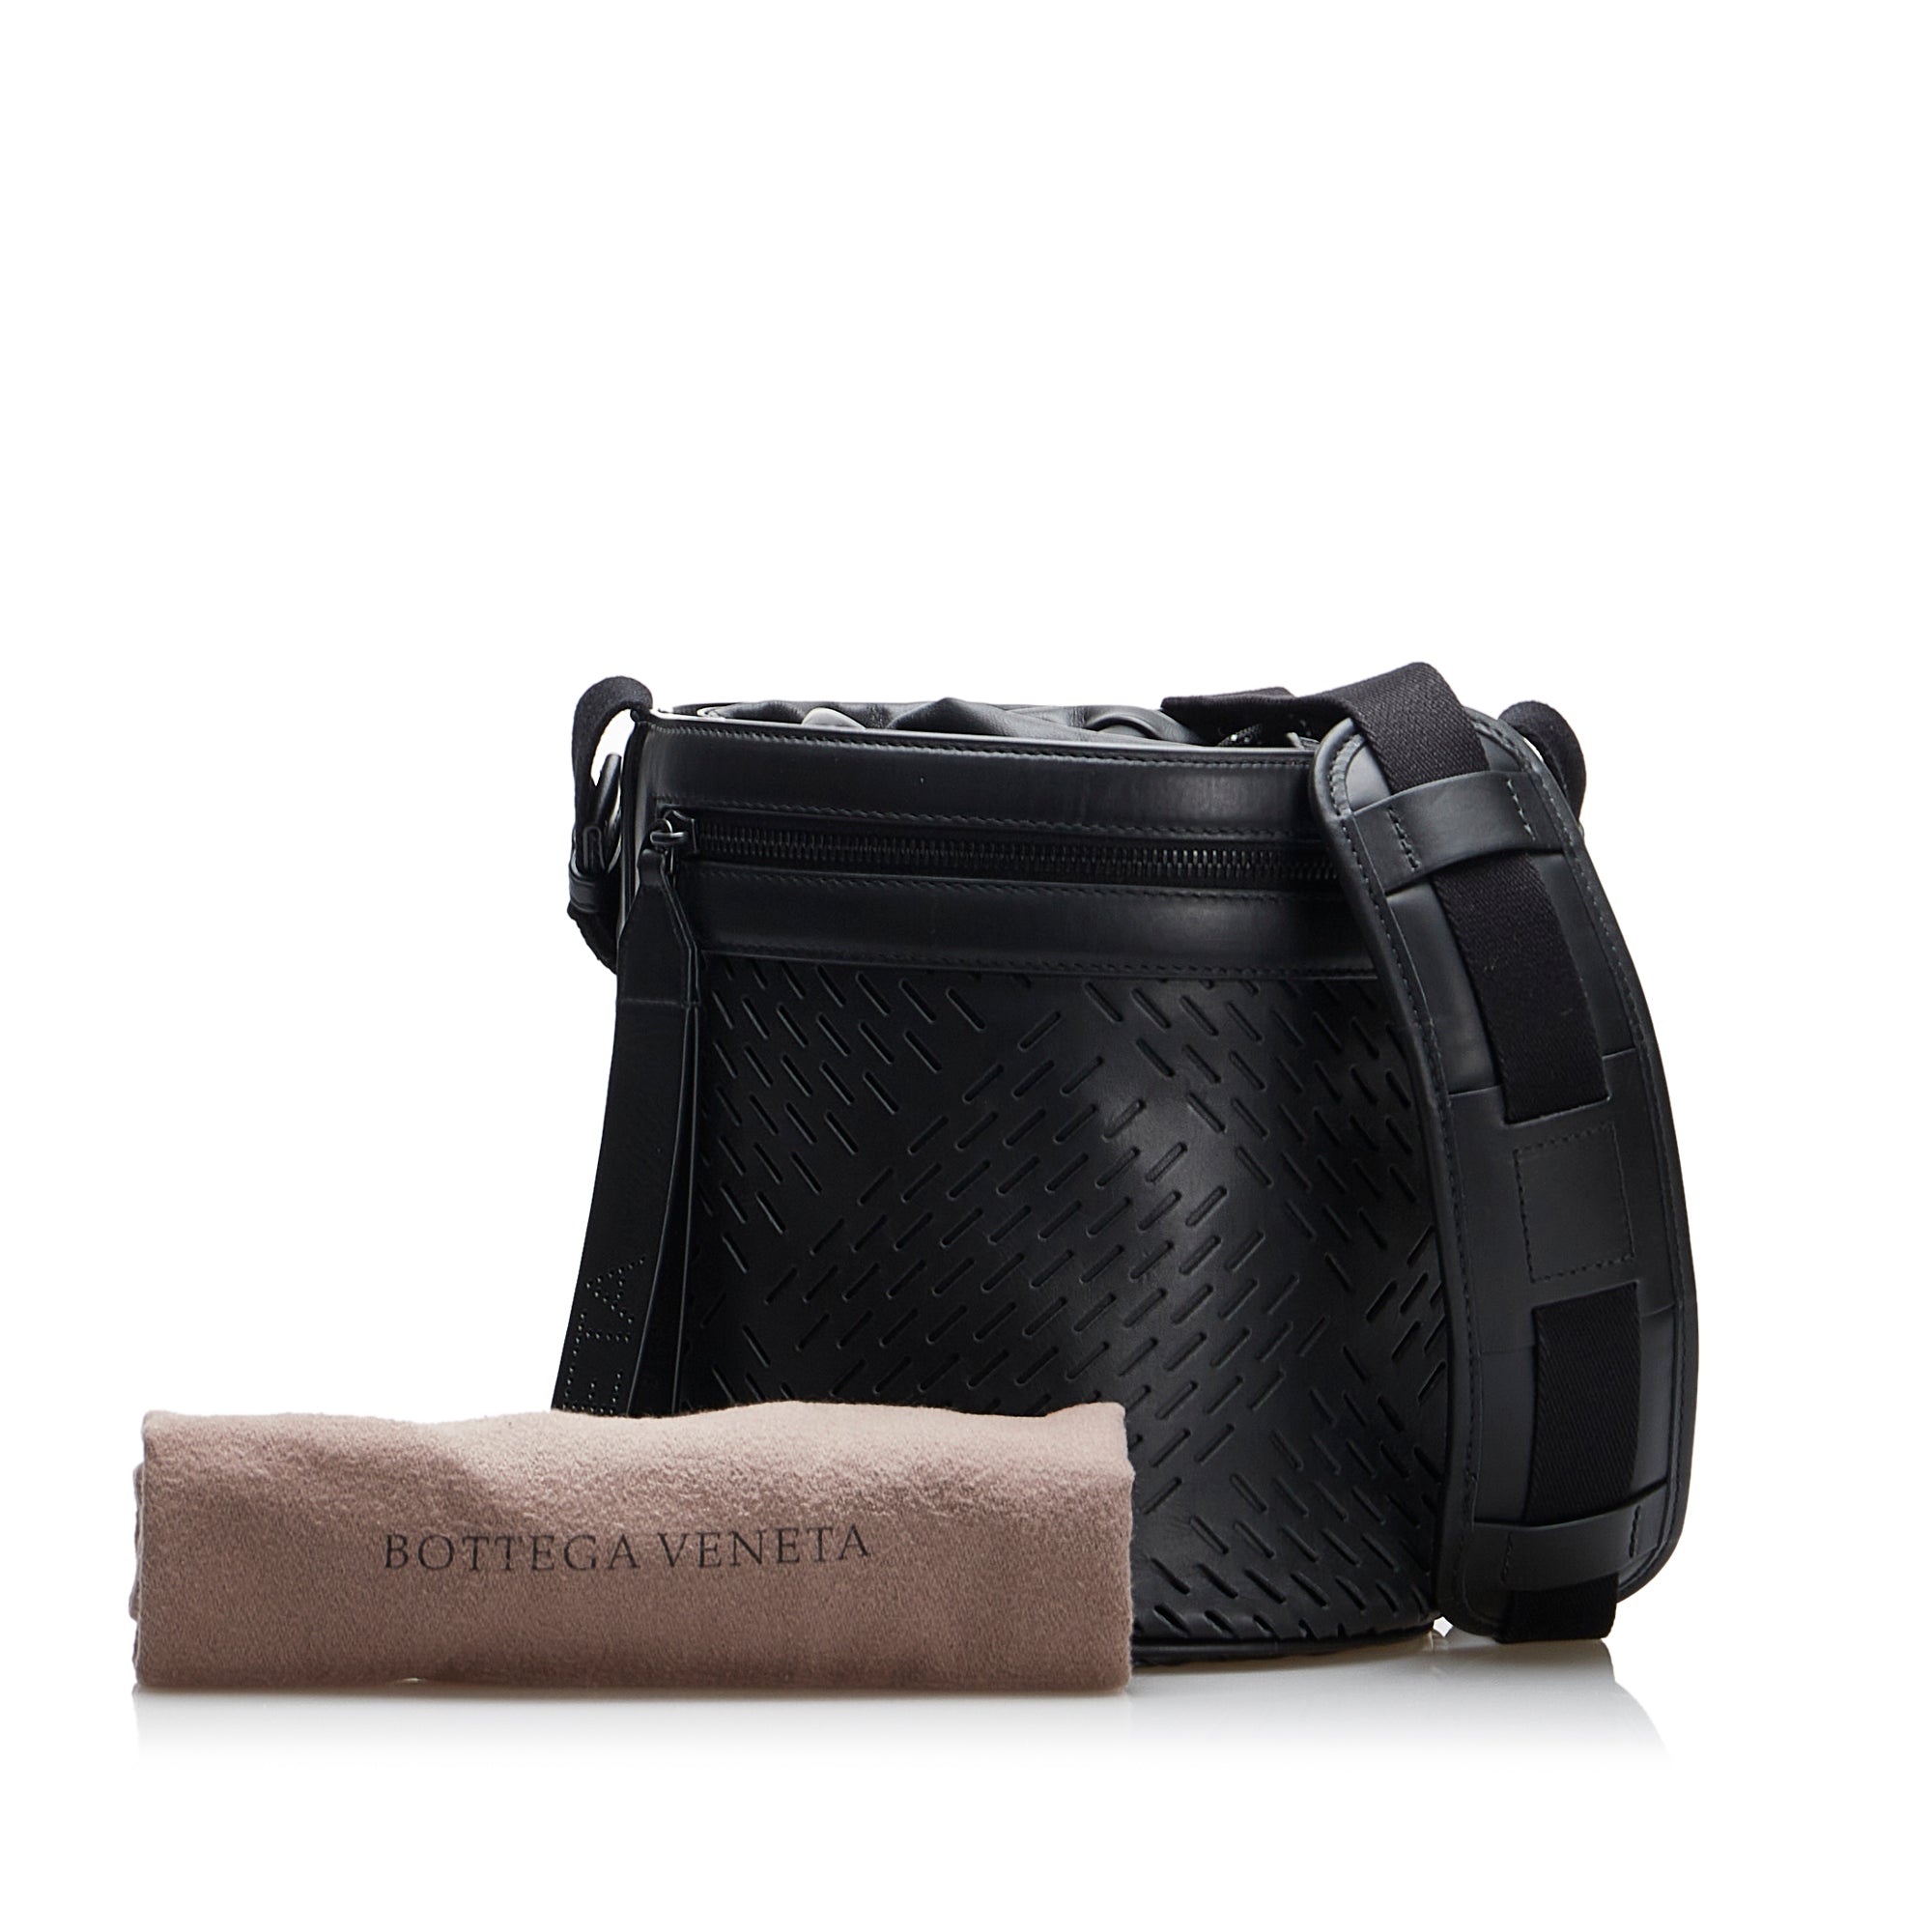 Chanel Patent Tote Handbag - 38 For Sale on 1stDibs